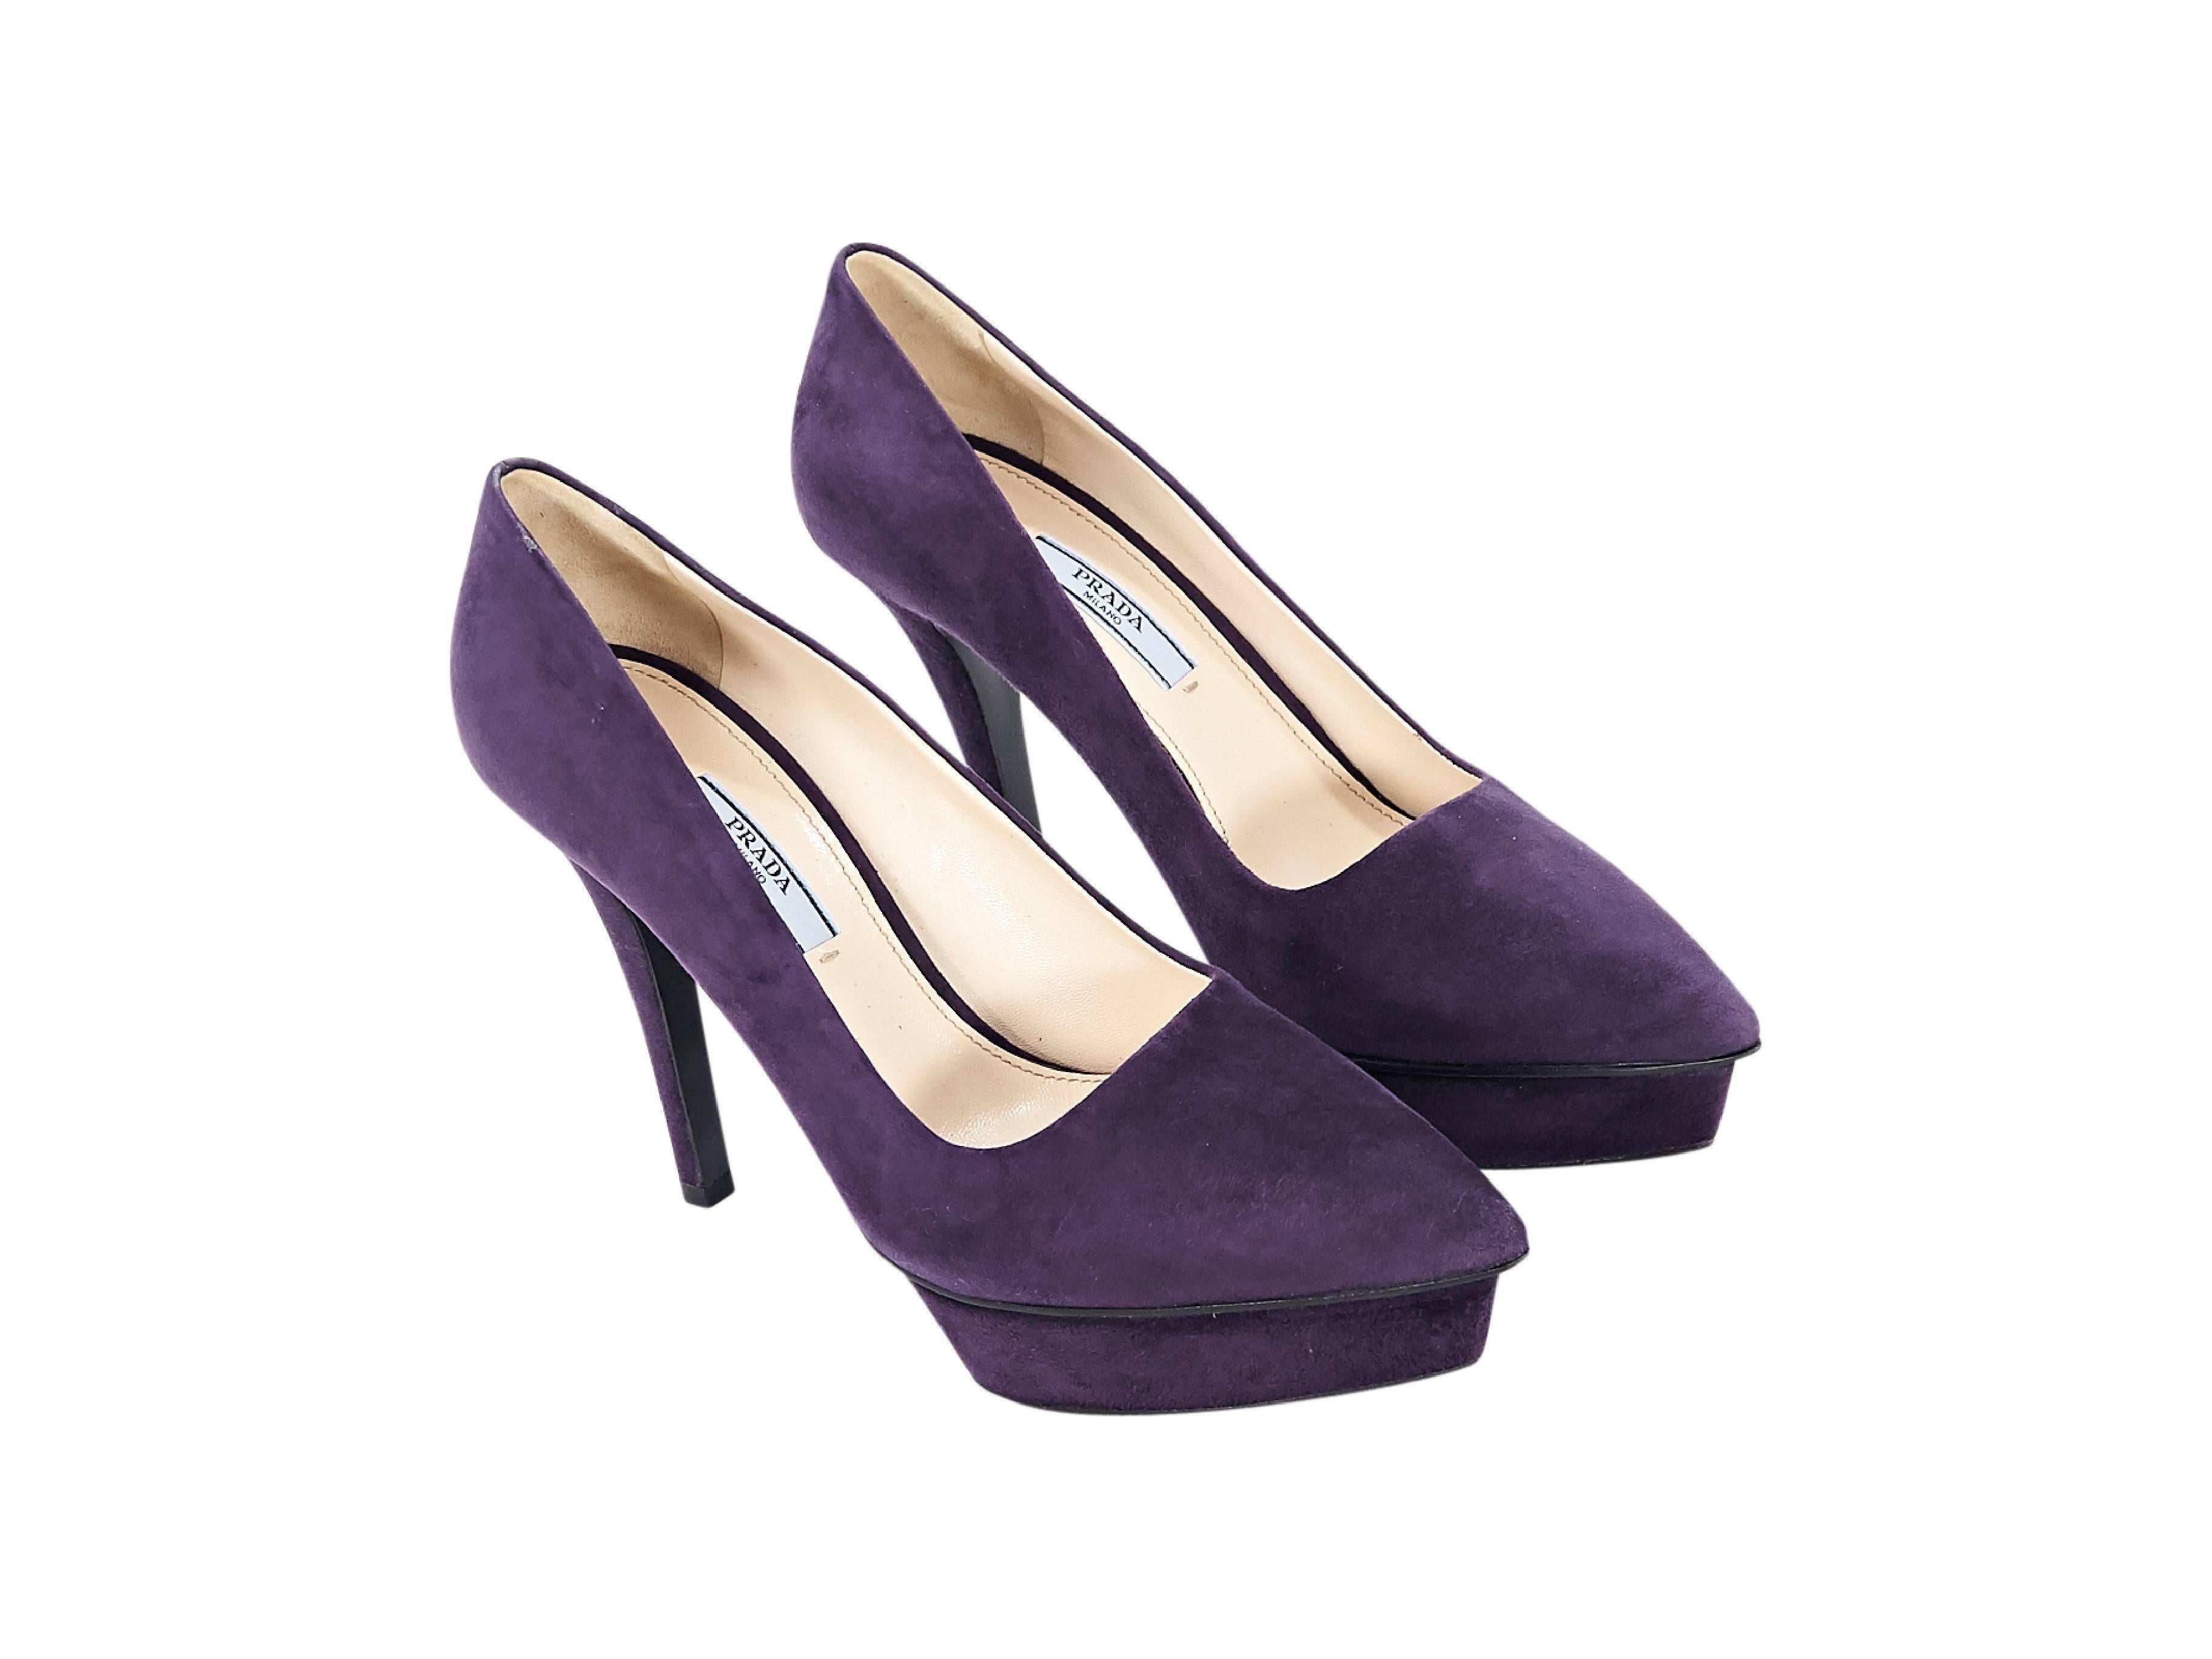 Product details:  Purple suede platform pumps by Prada.  Point toe.  Slip-on style.  EU size 38.5.  4.5